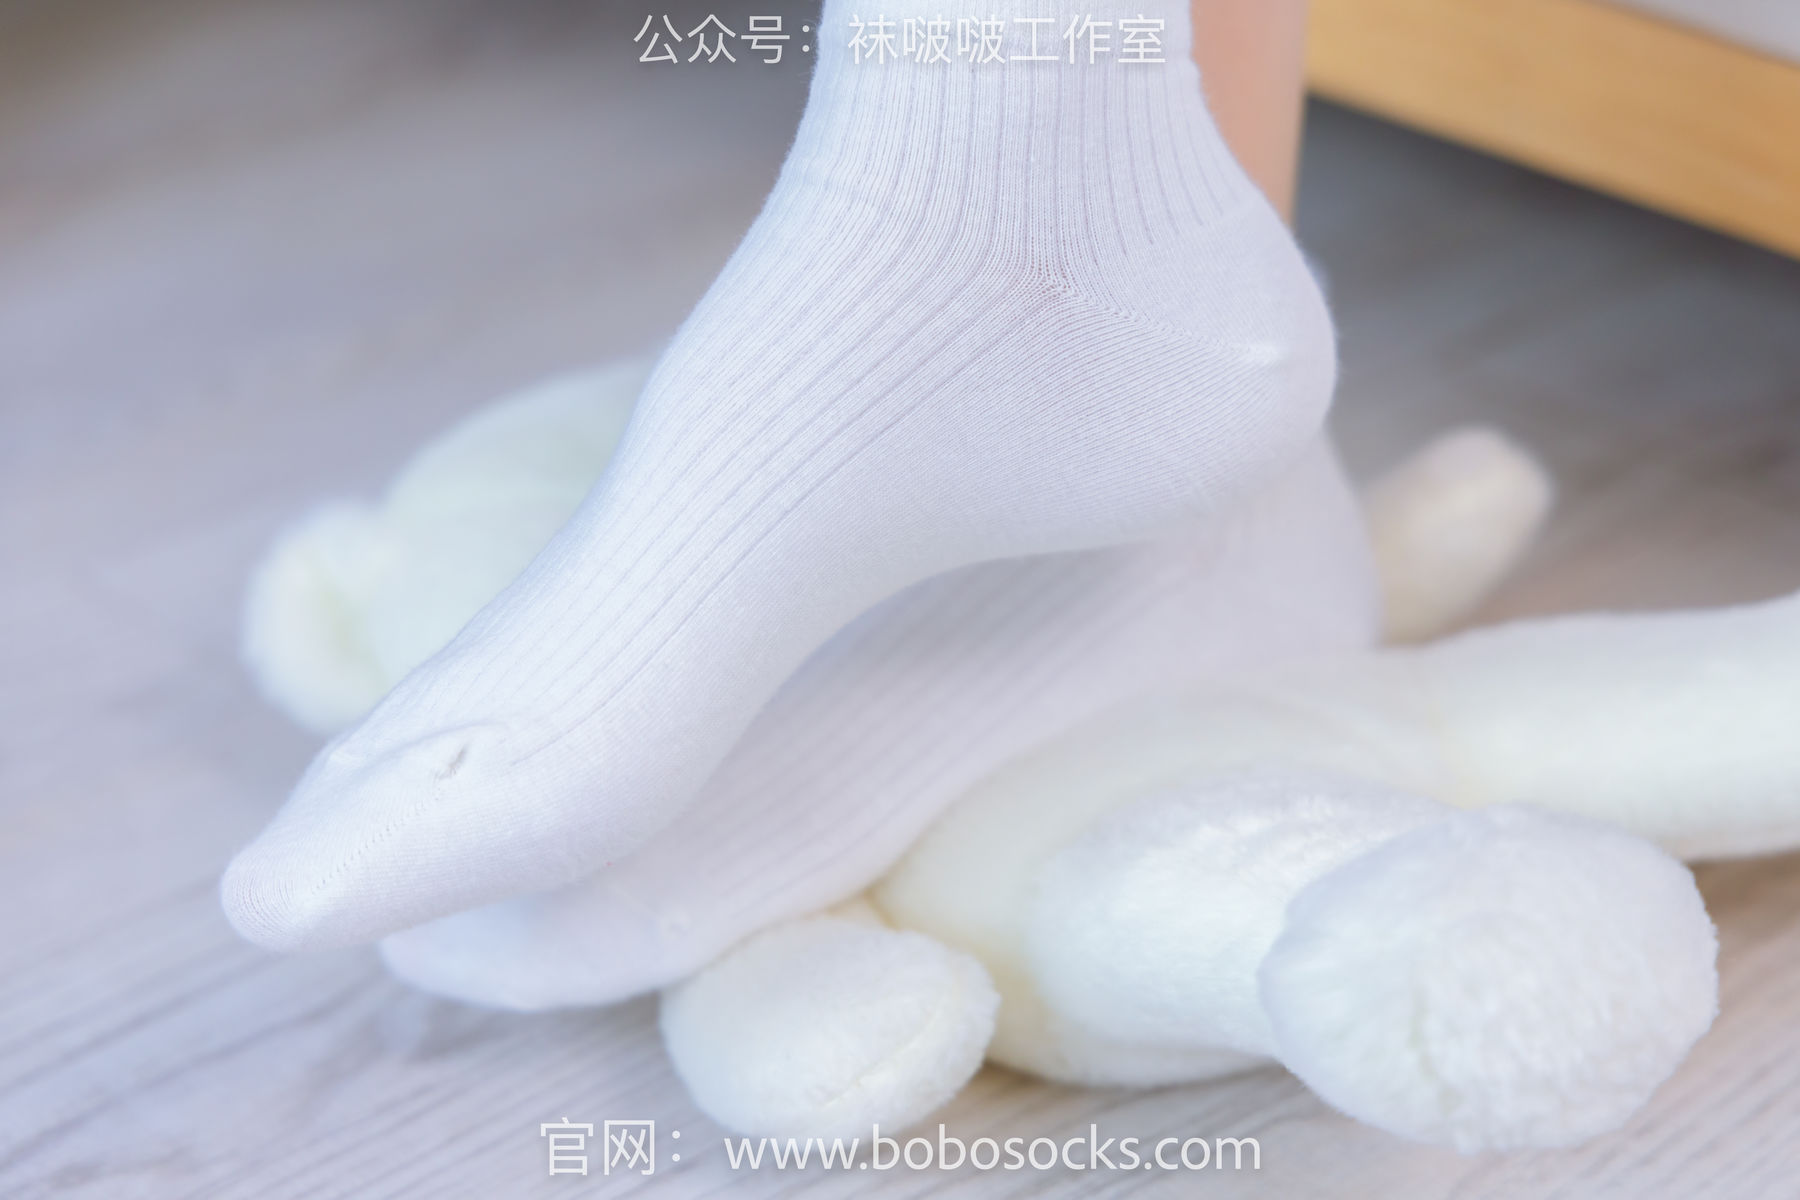 BoBoSocks袜啵啵 No.118 稚予-运动鞋、白棉袜、肉丝、踩小熊玩偶/(140P)